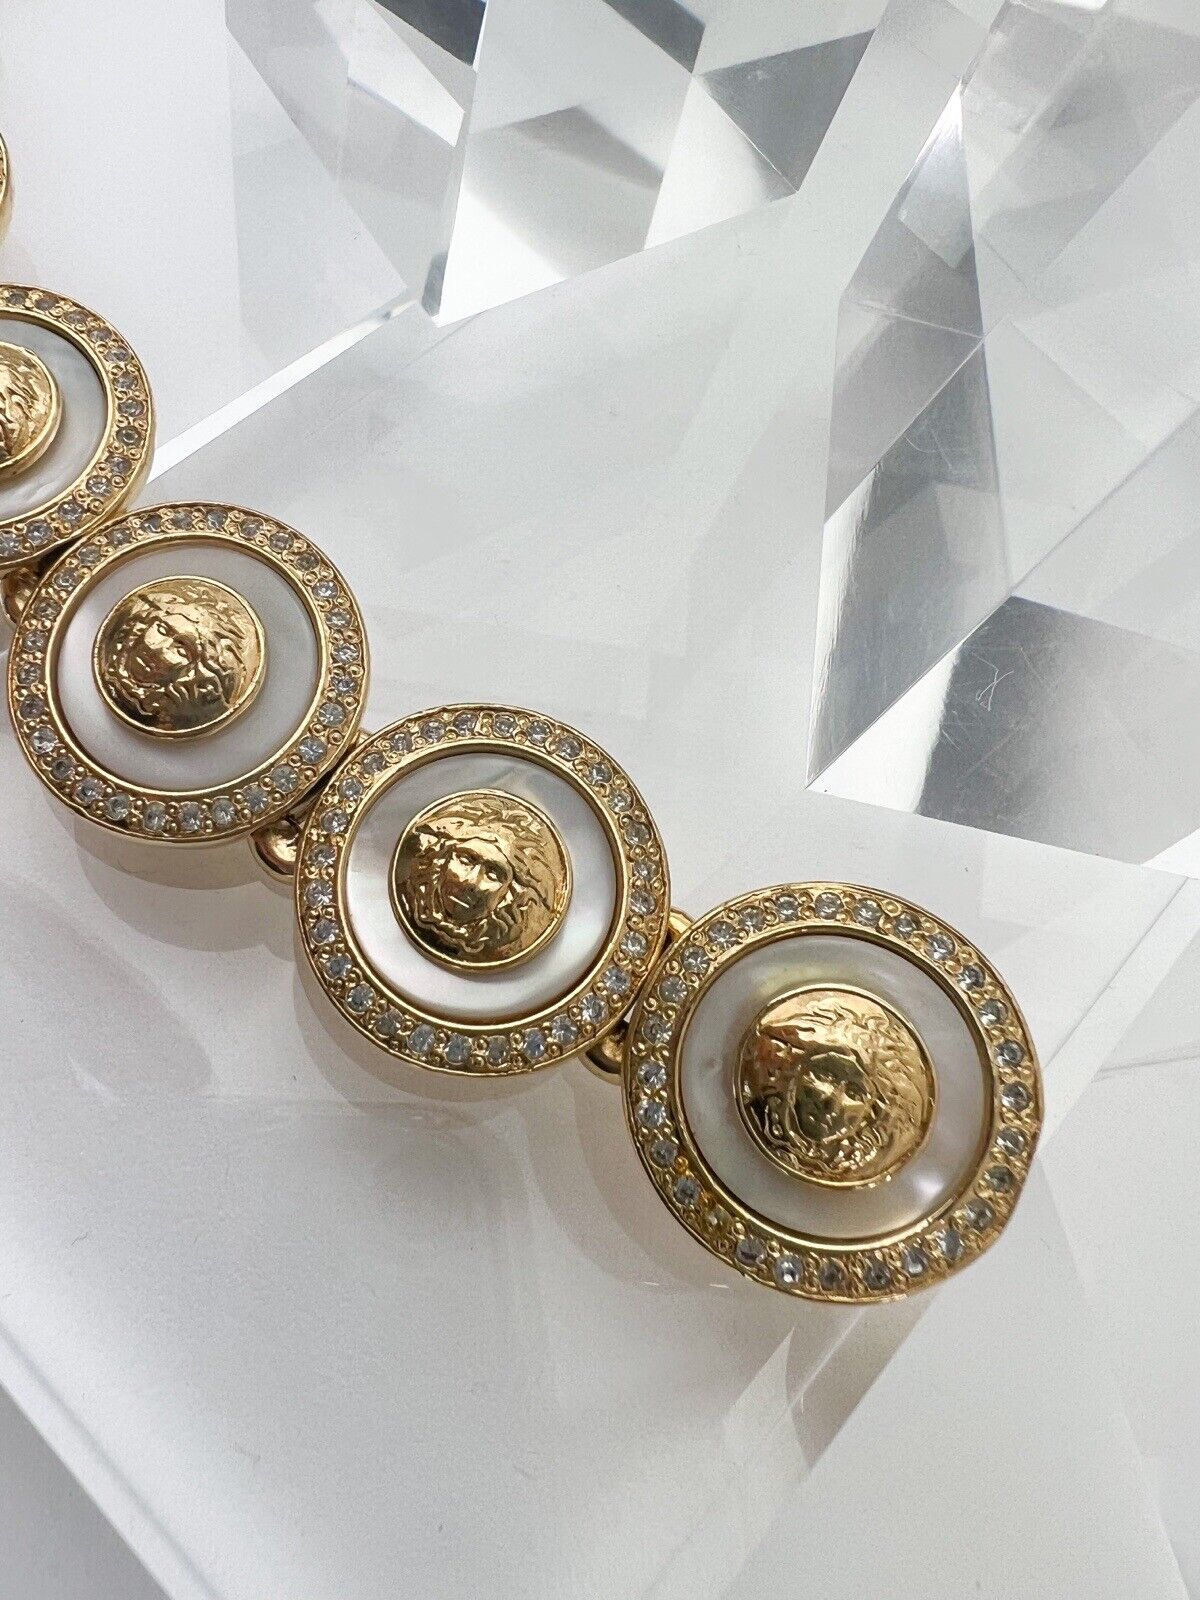  GIANNI VERSACE Vintage Charm Bracelet Medusa Head Gold Pearl 